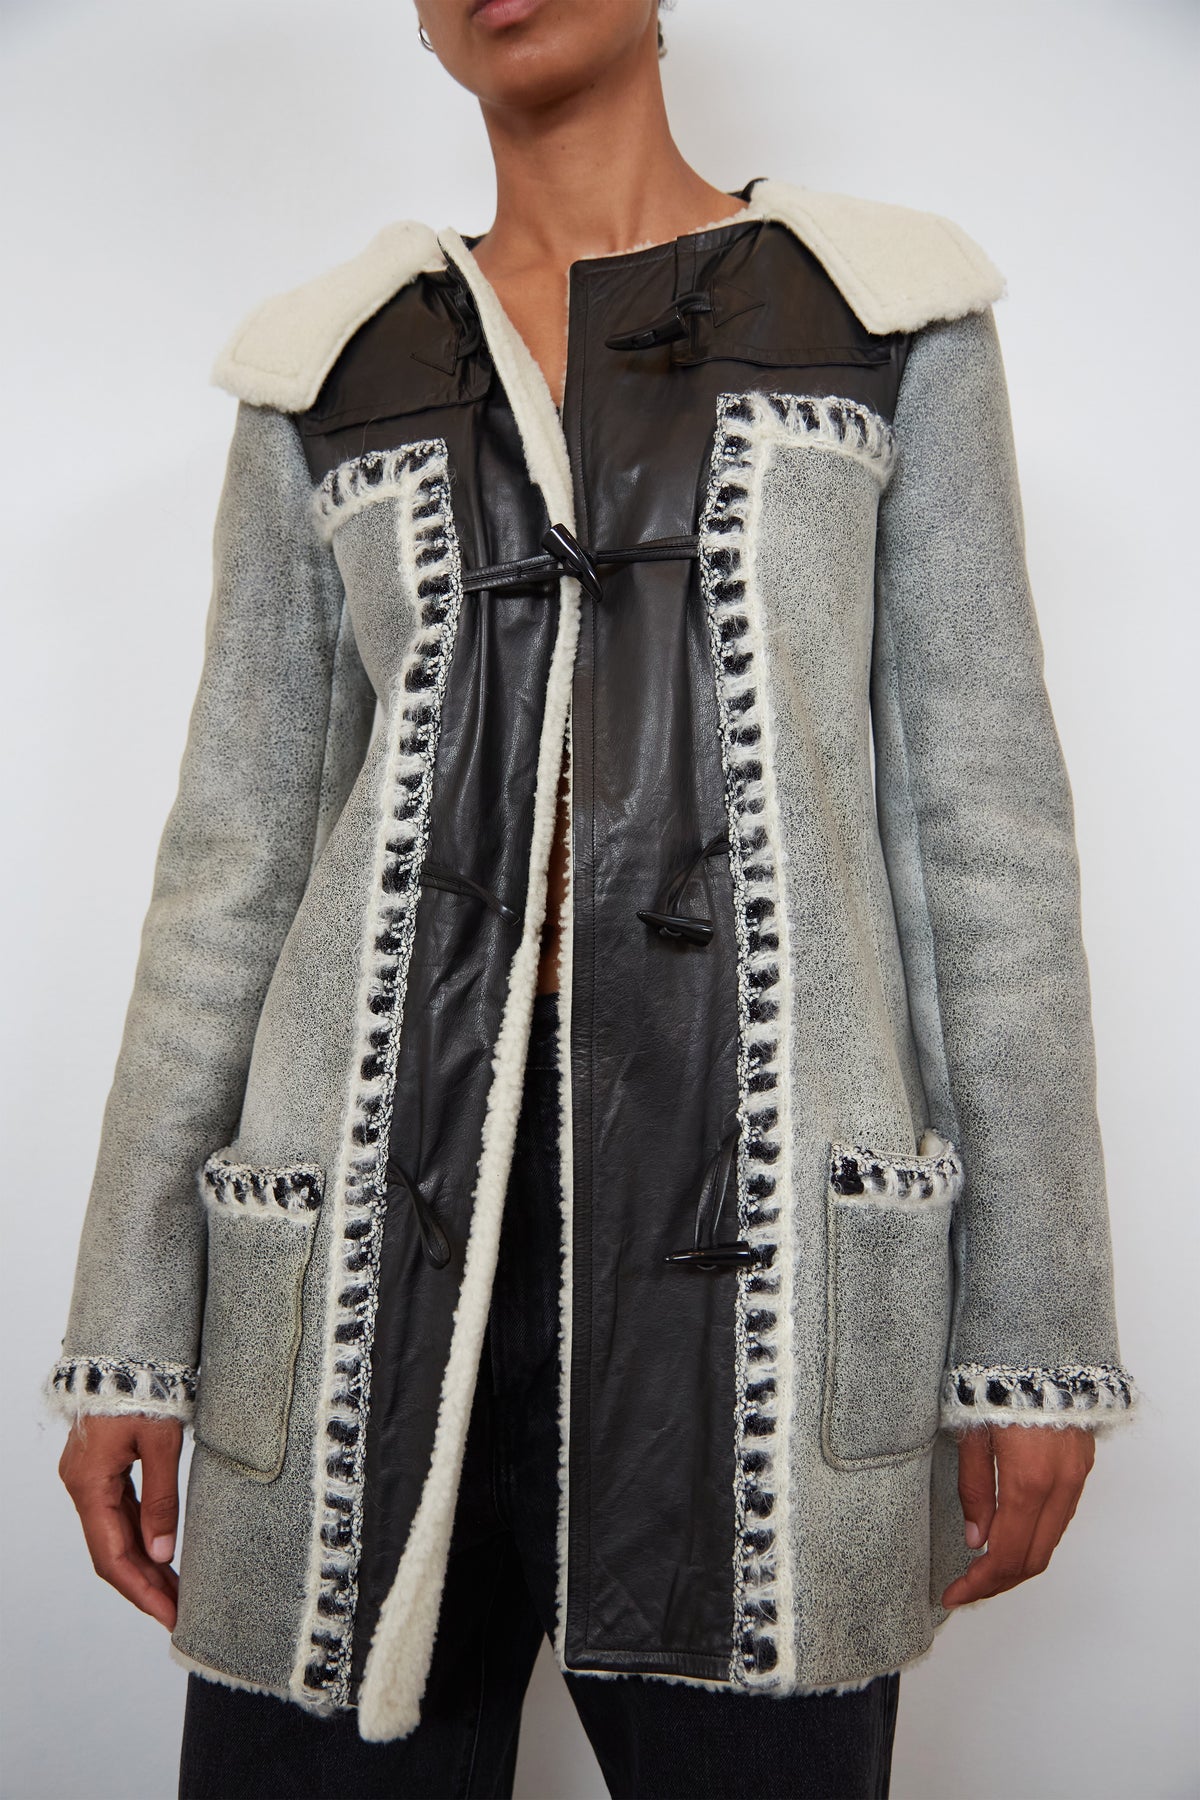 Chanel shearling jacket